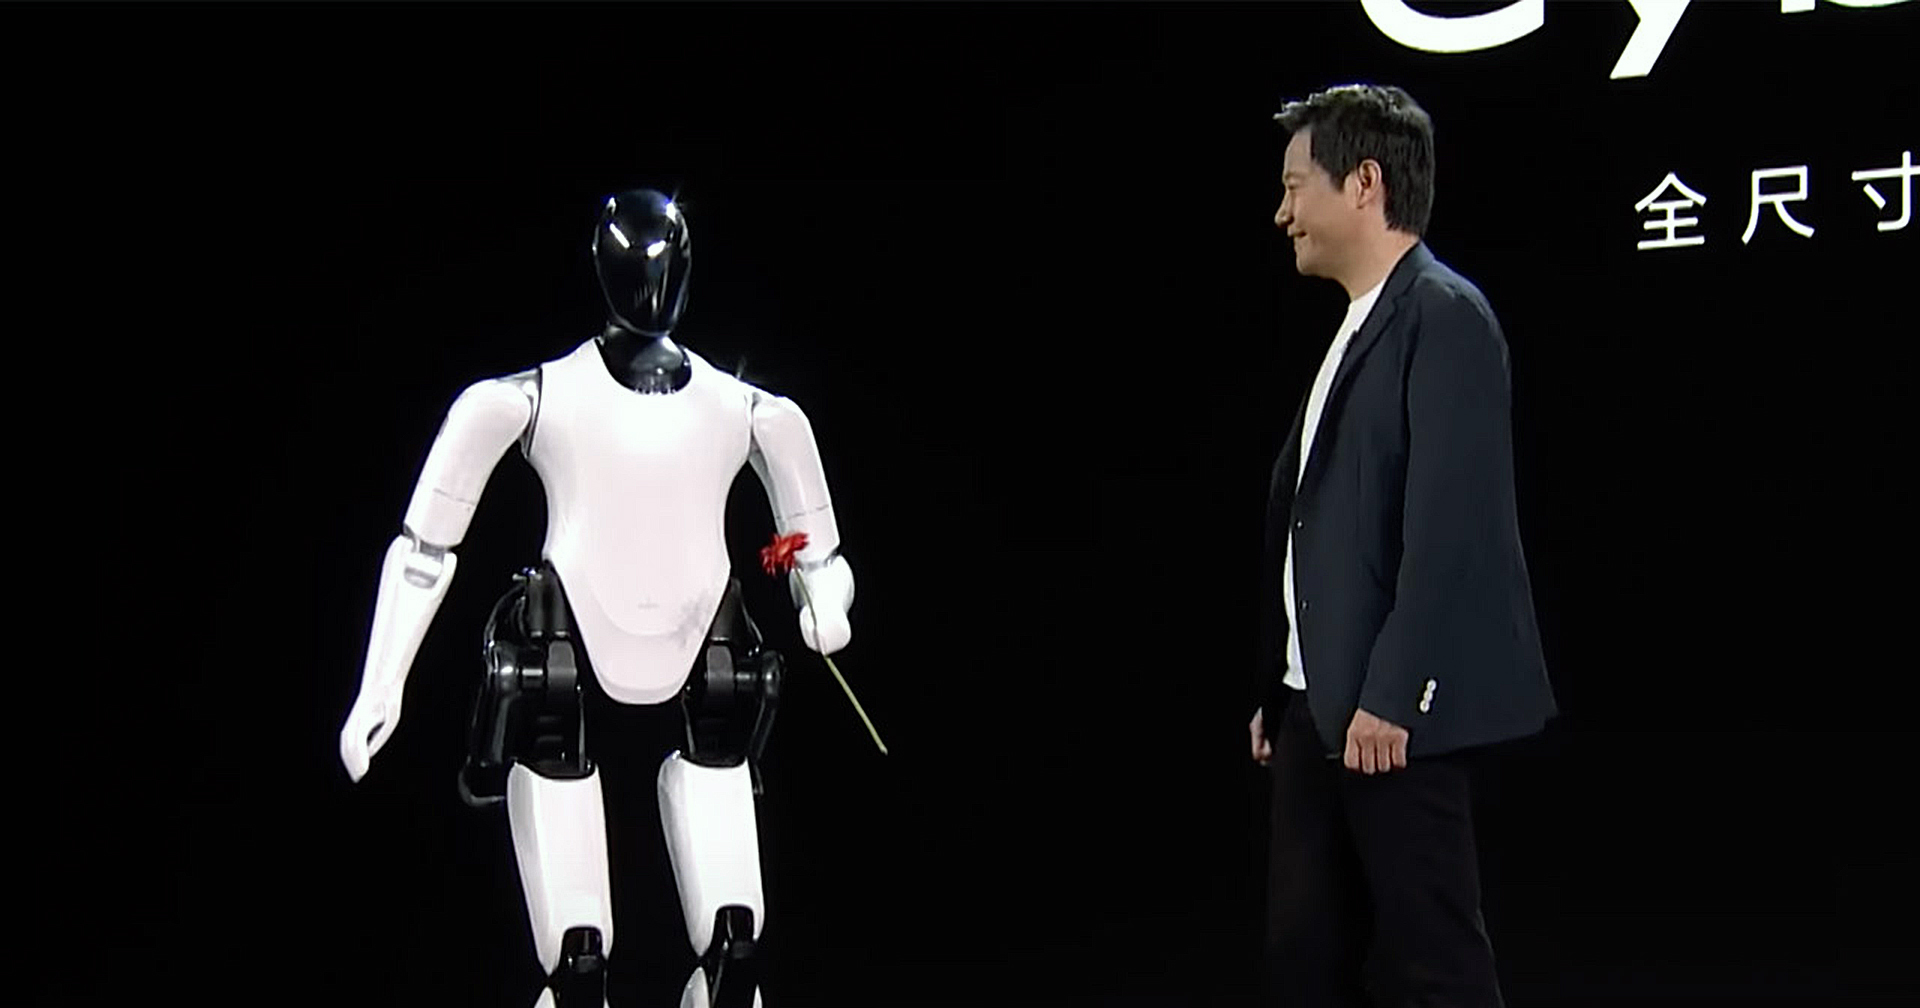 Xiaomi แซงหน้า Tesla เปิดตัวหุ่นยนต์ฮิวแมนนอยด์ตัวแรก